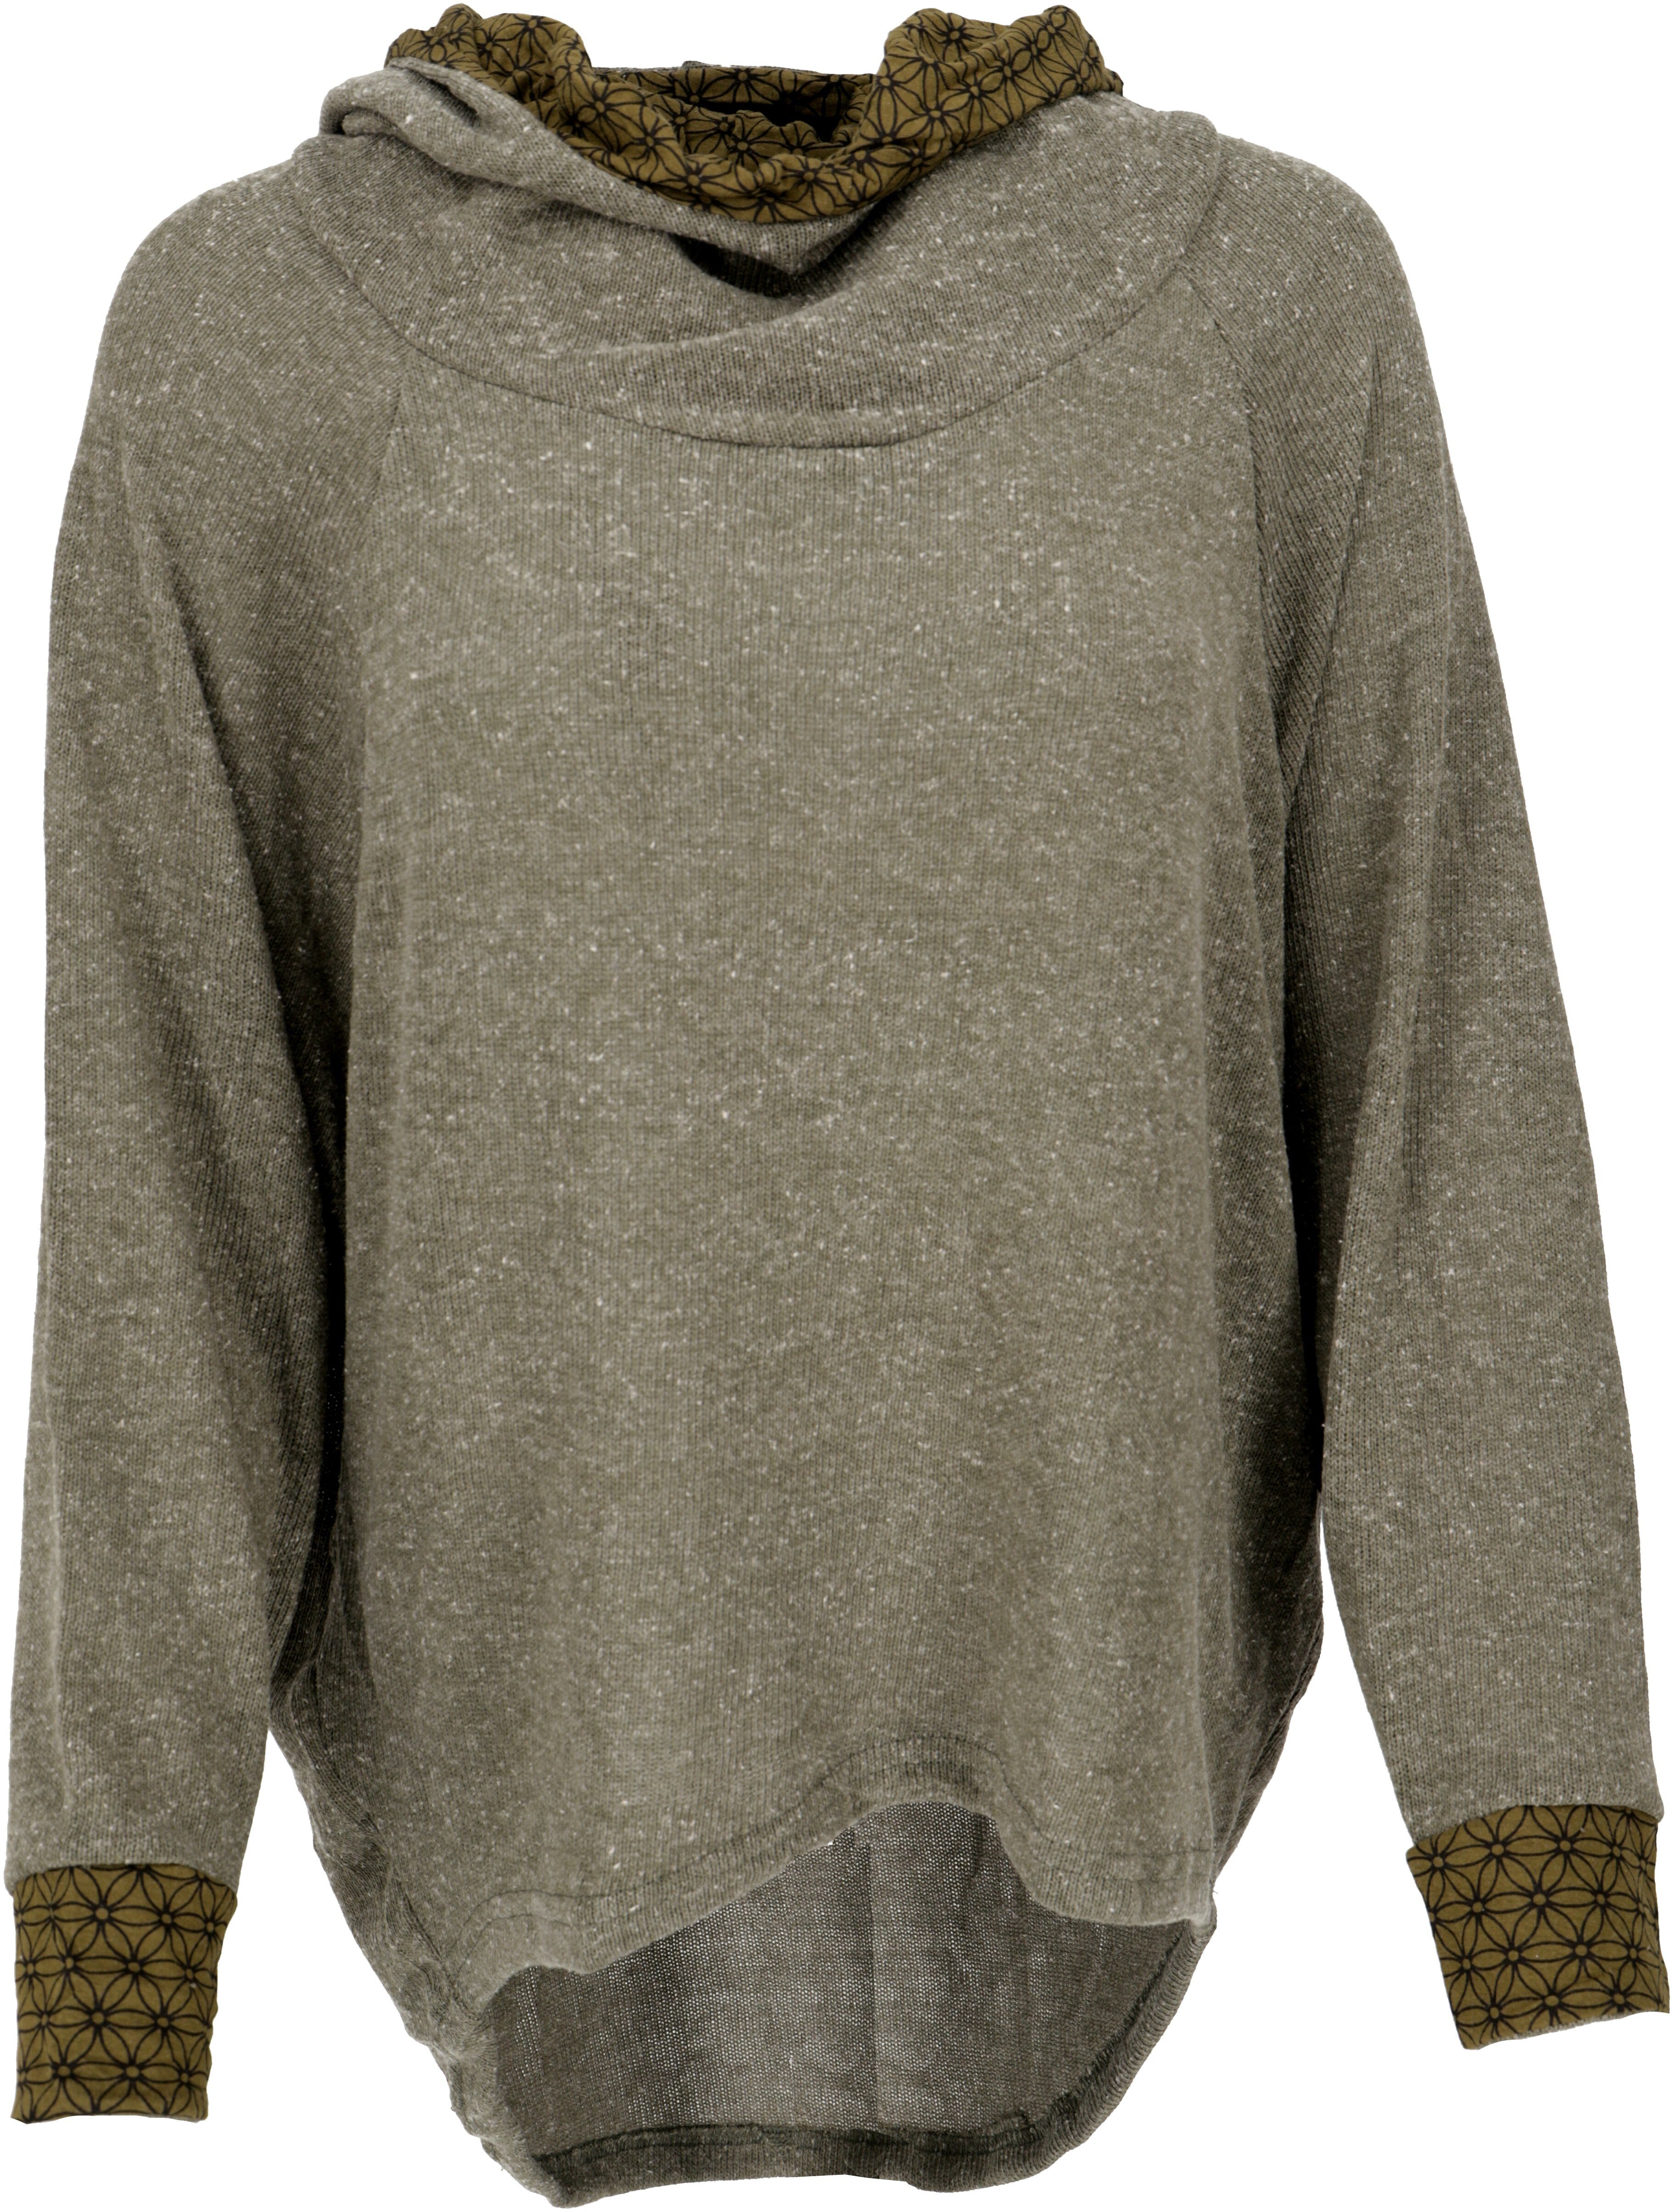 Kapuzenpullover Longsleeve -.. Bekleidung khakigrün Hoody, Sweatshirt, Guru-Shop Pullover, alternative